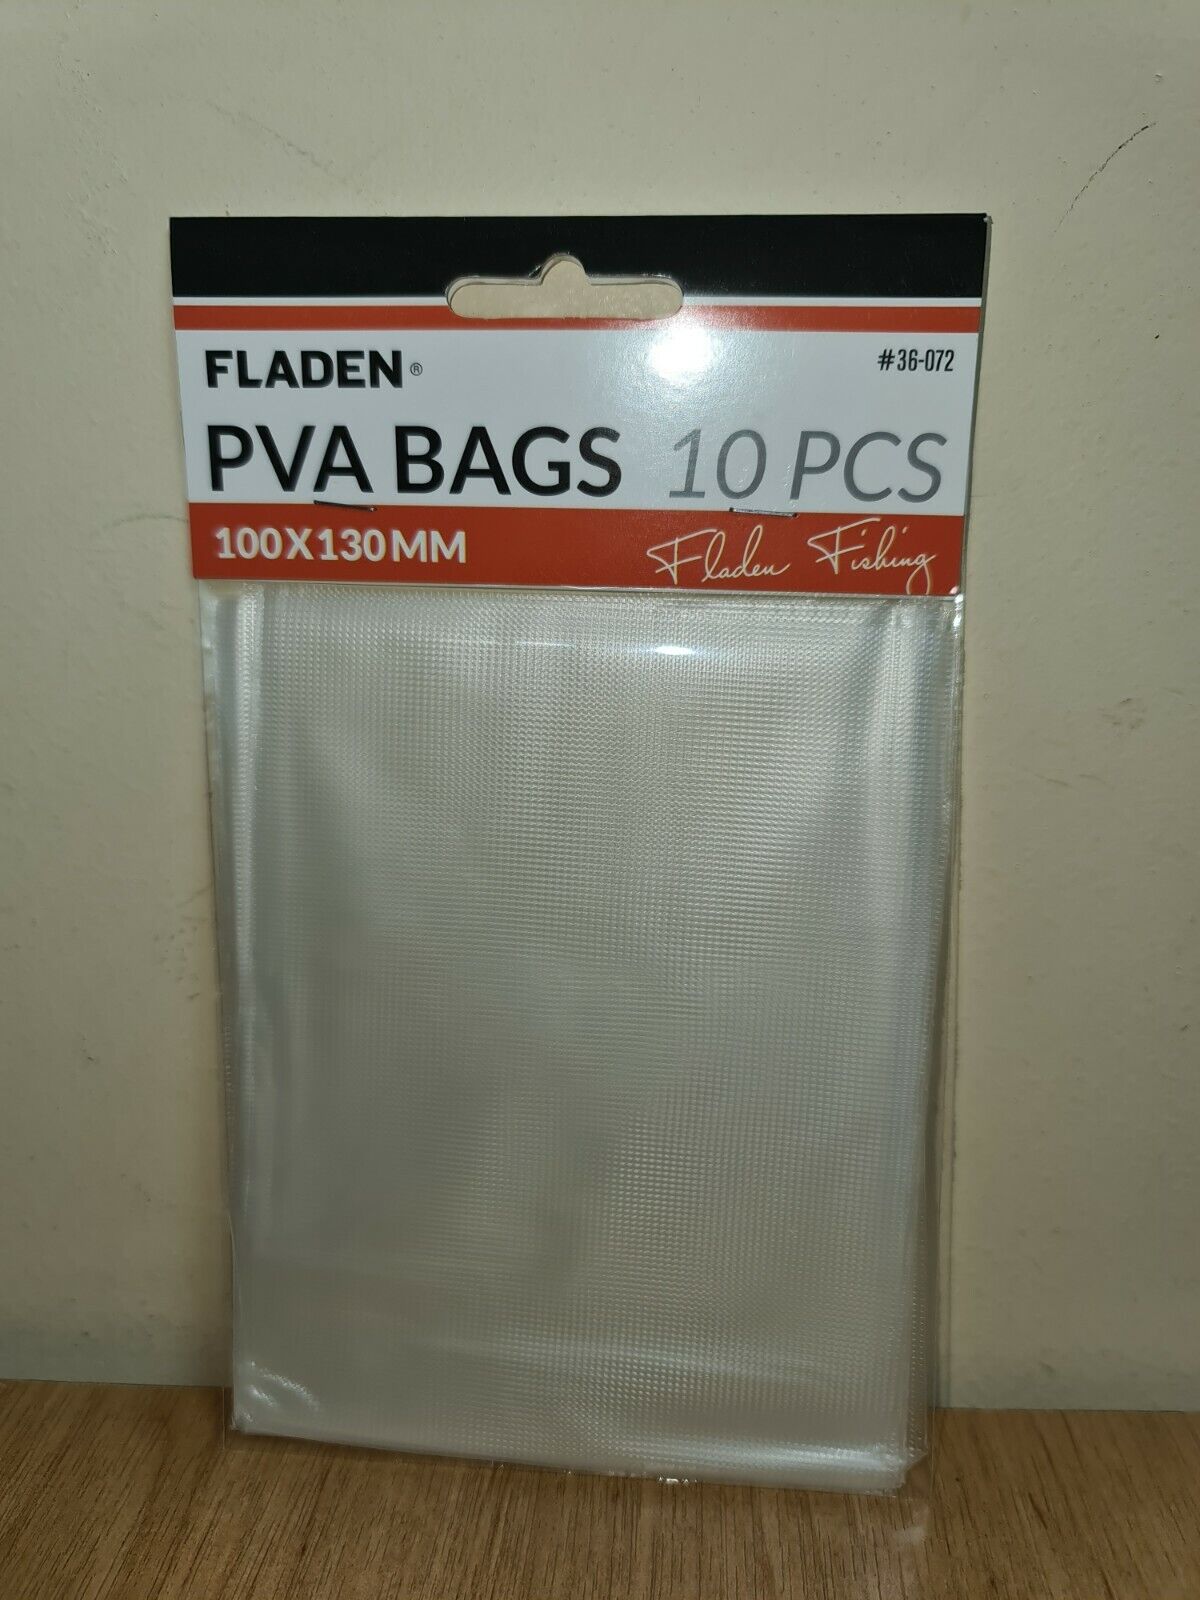 Fladen PVA Bags qty 10 / 100x130mm / Carp Fishing PVA Bags - The